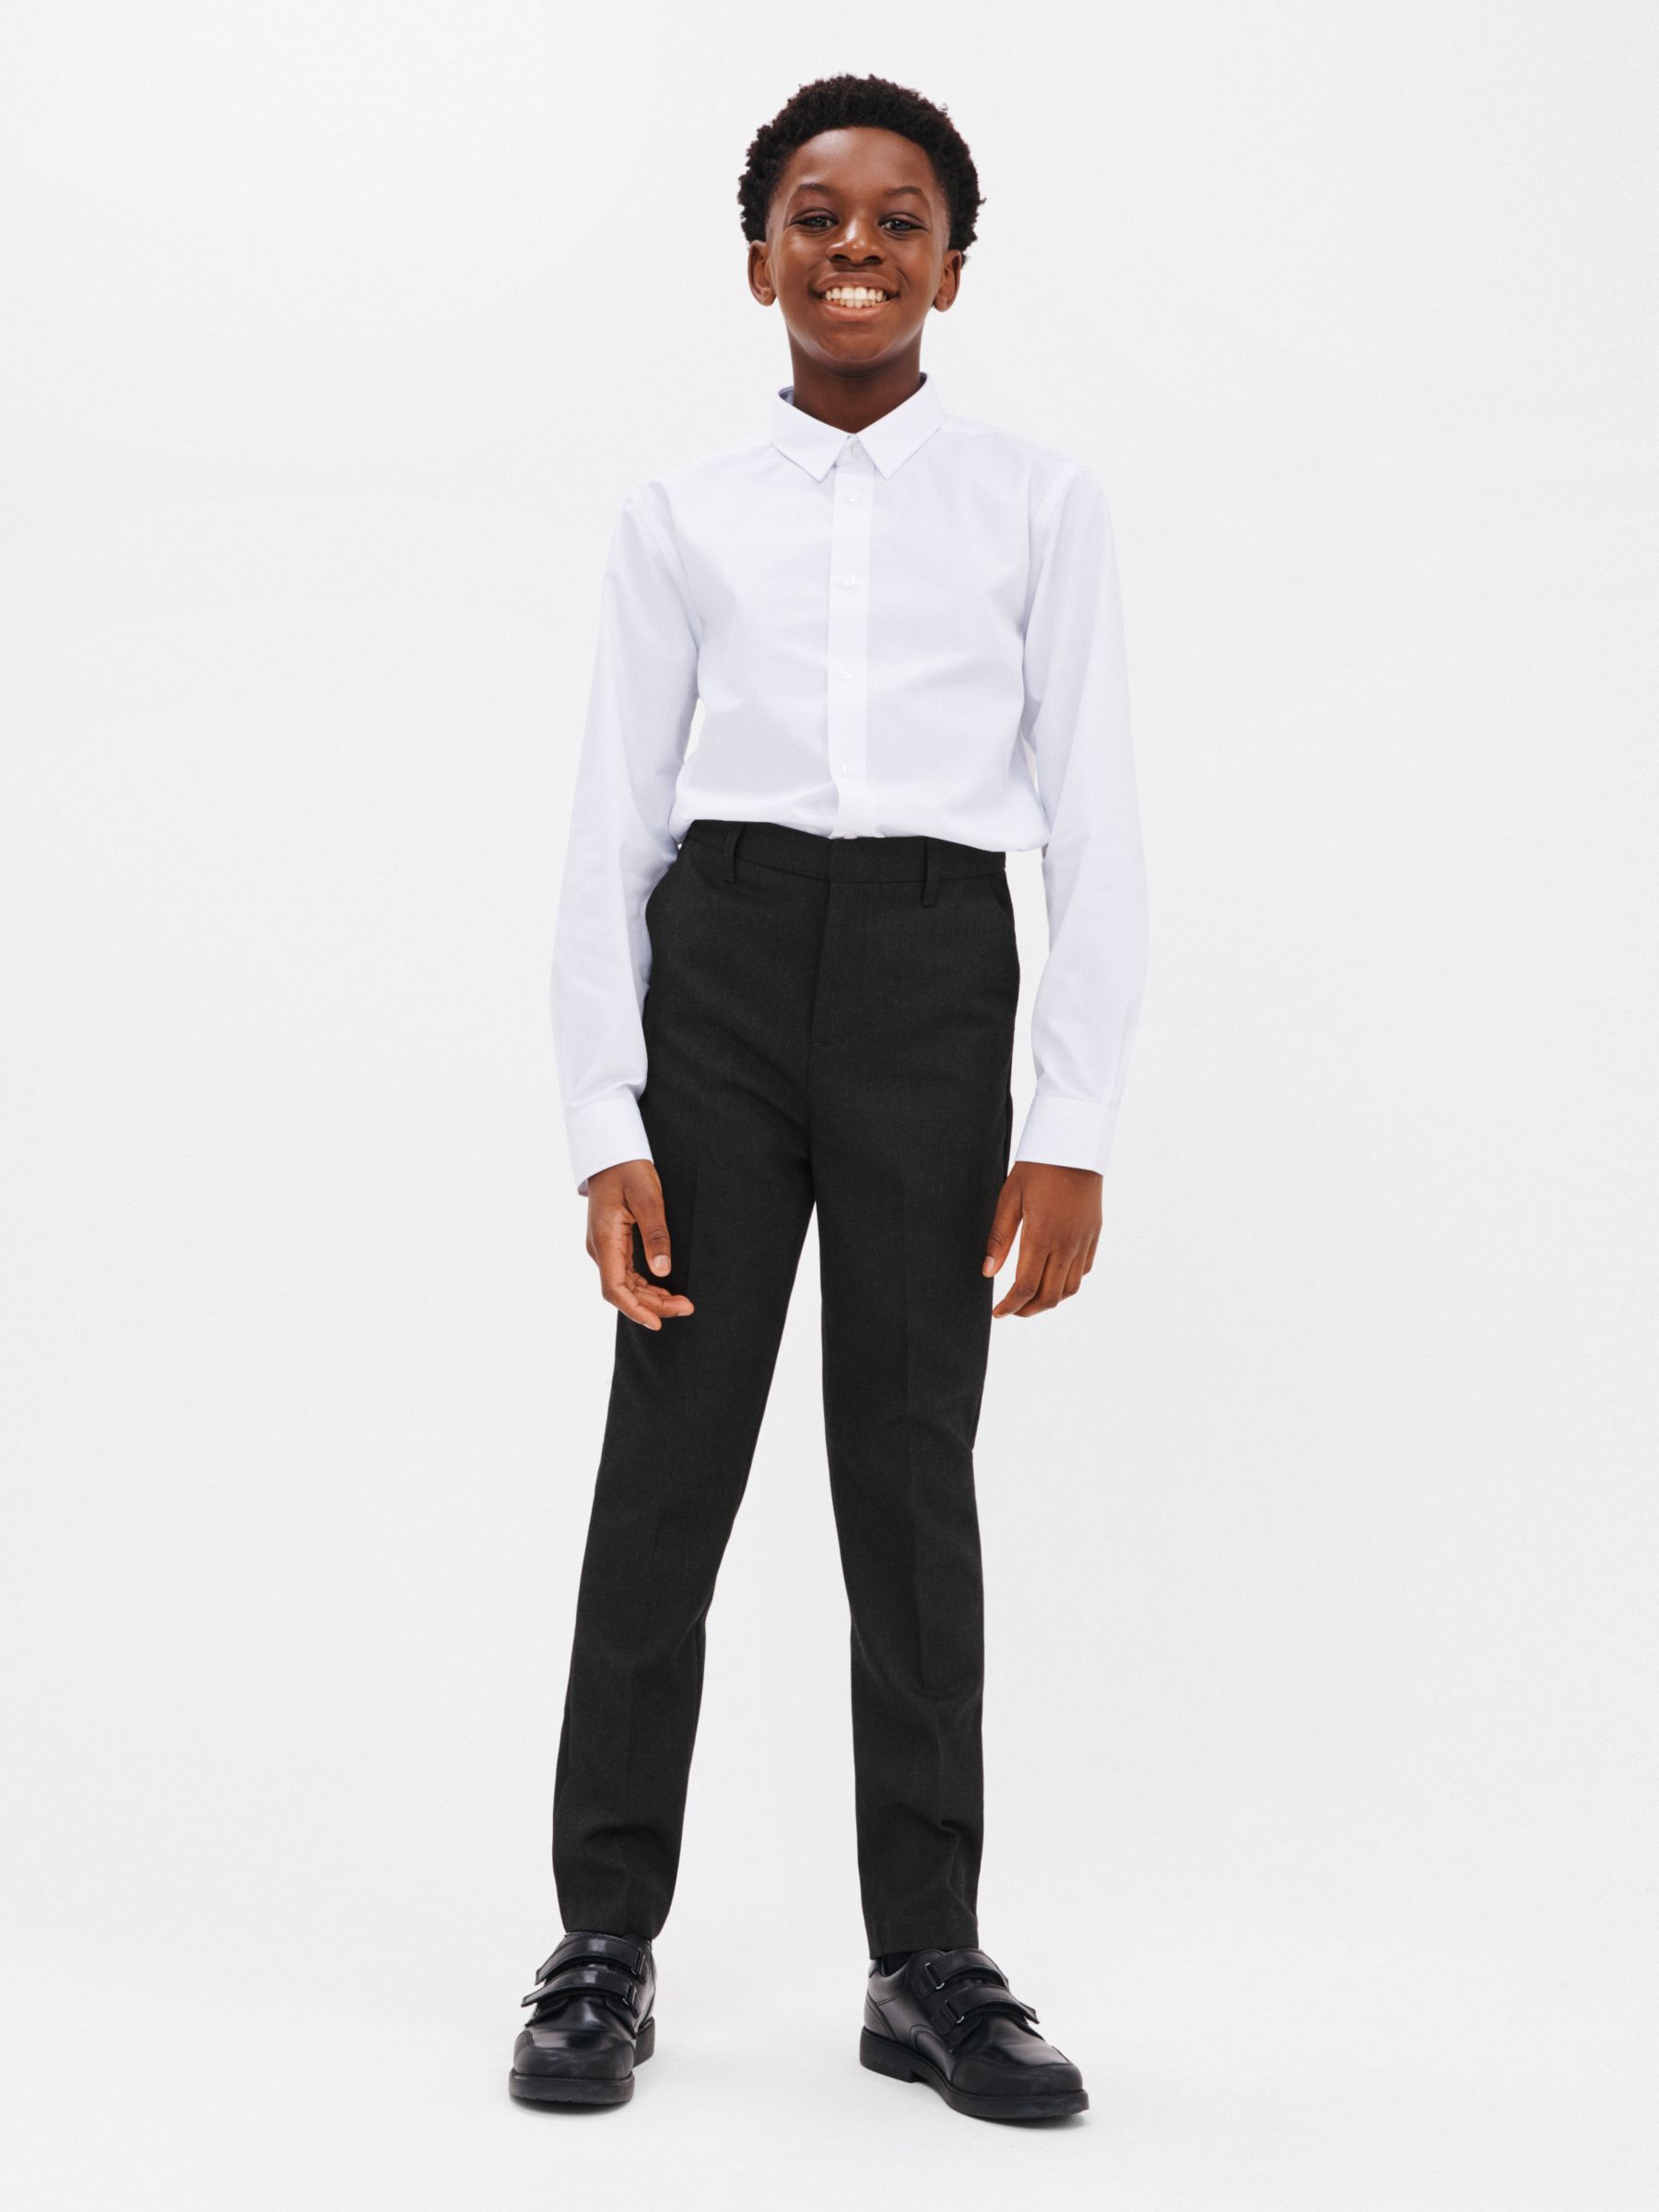 Girls Black Smart Trousers Women Tailored School Office Work Formal  Straight Fit